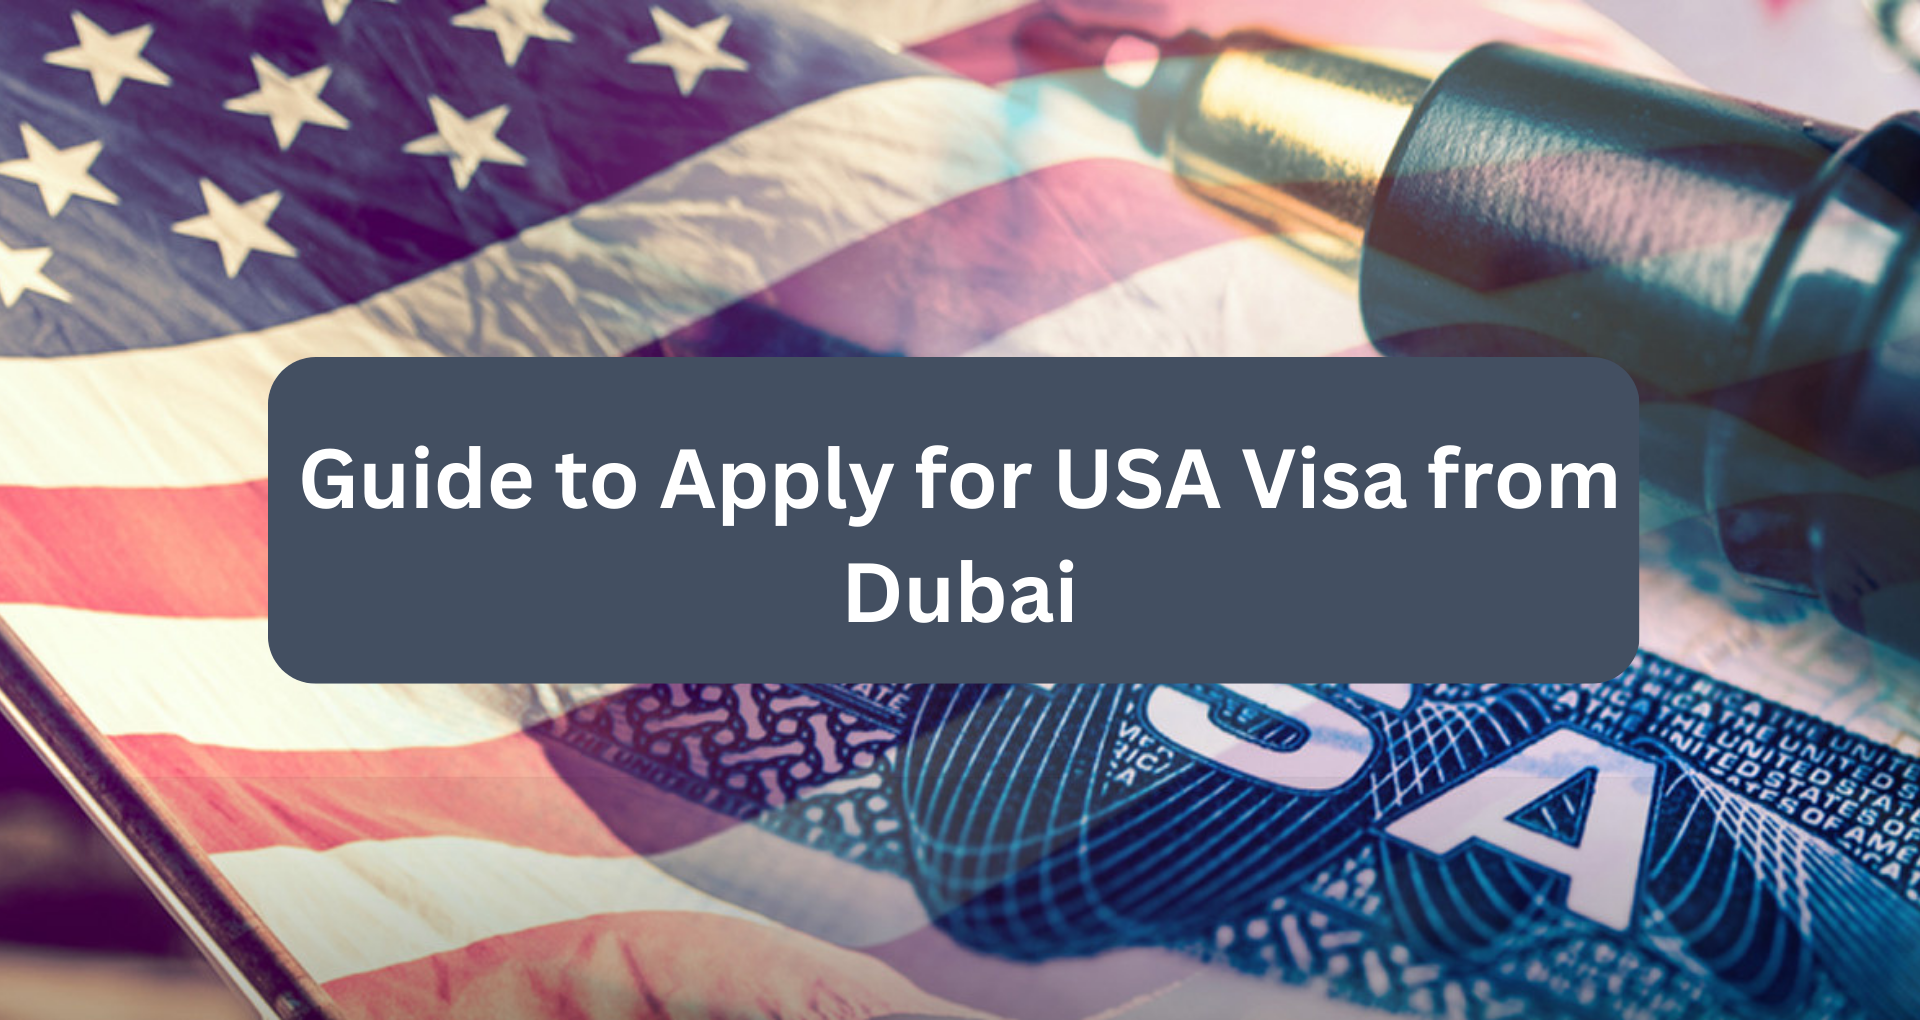 Guide to Apply USA Visa from Dubai